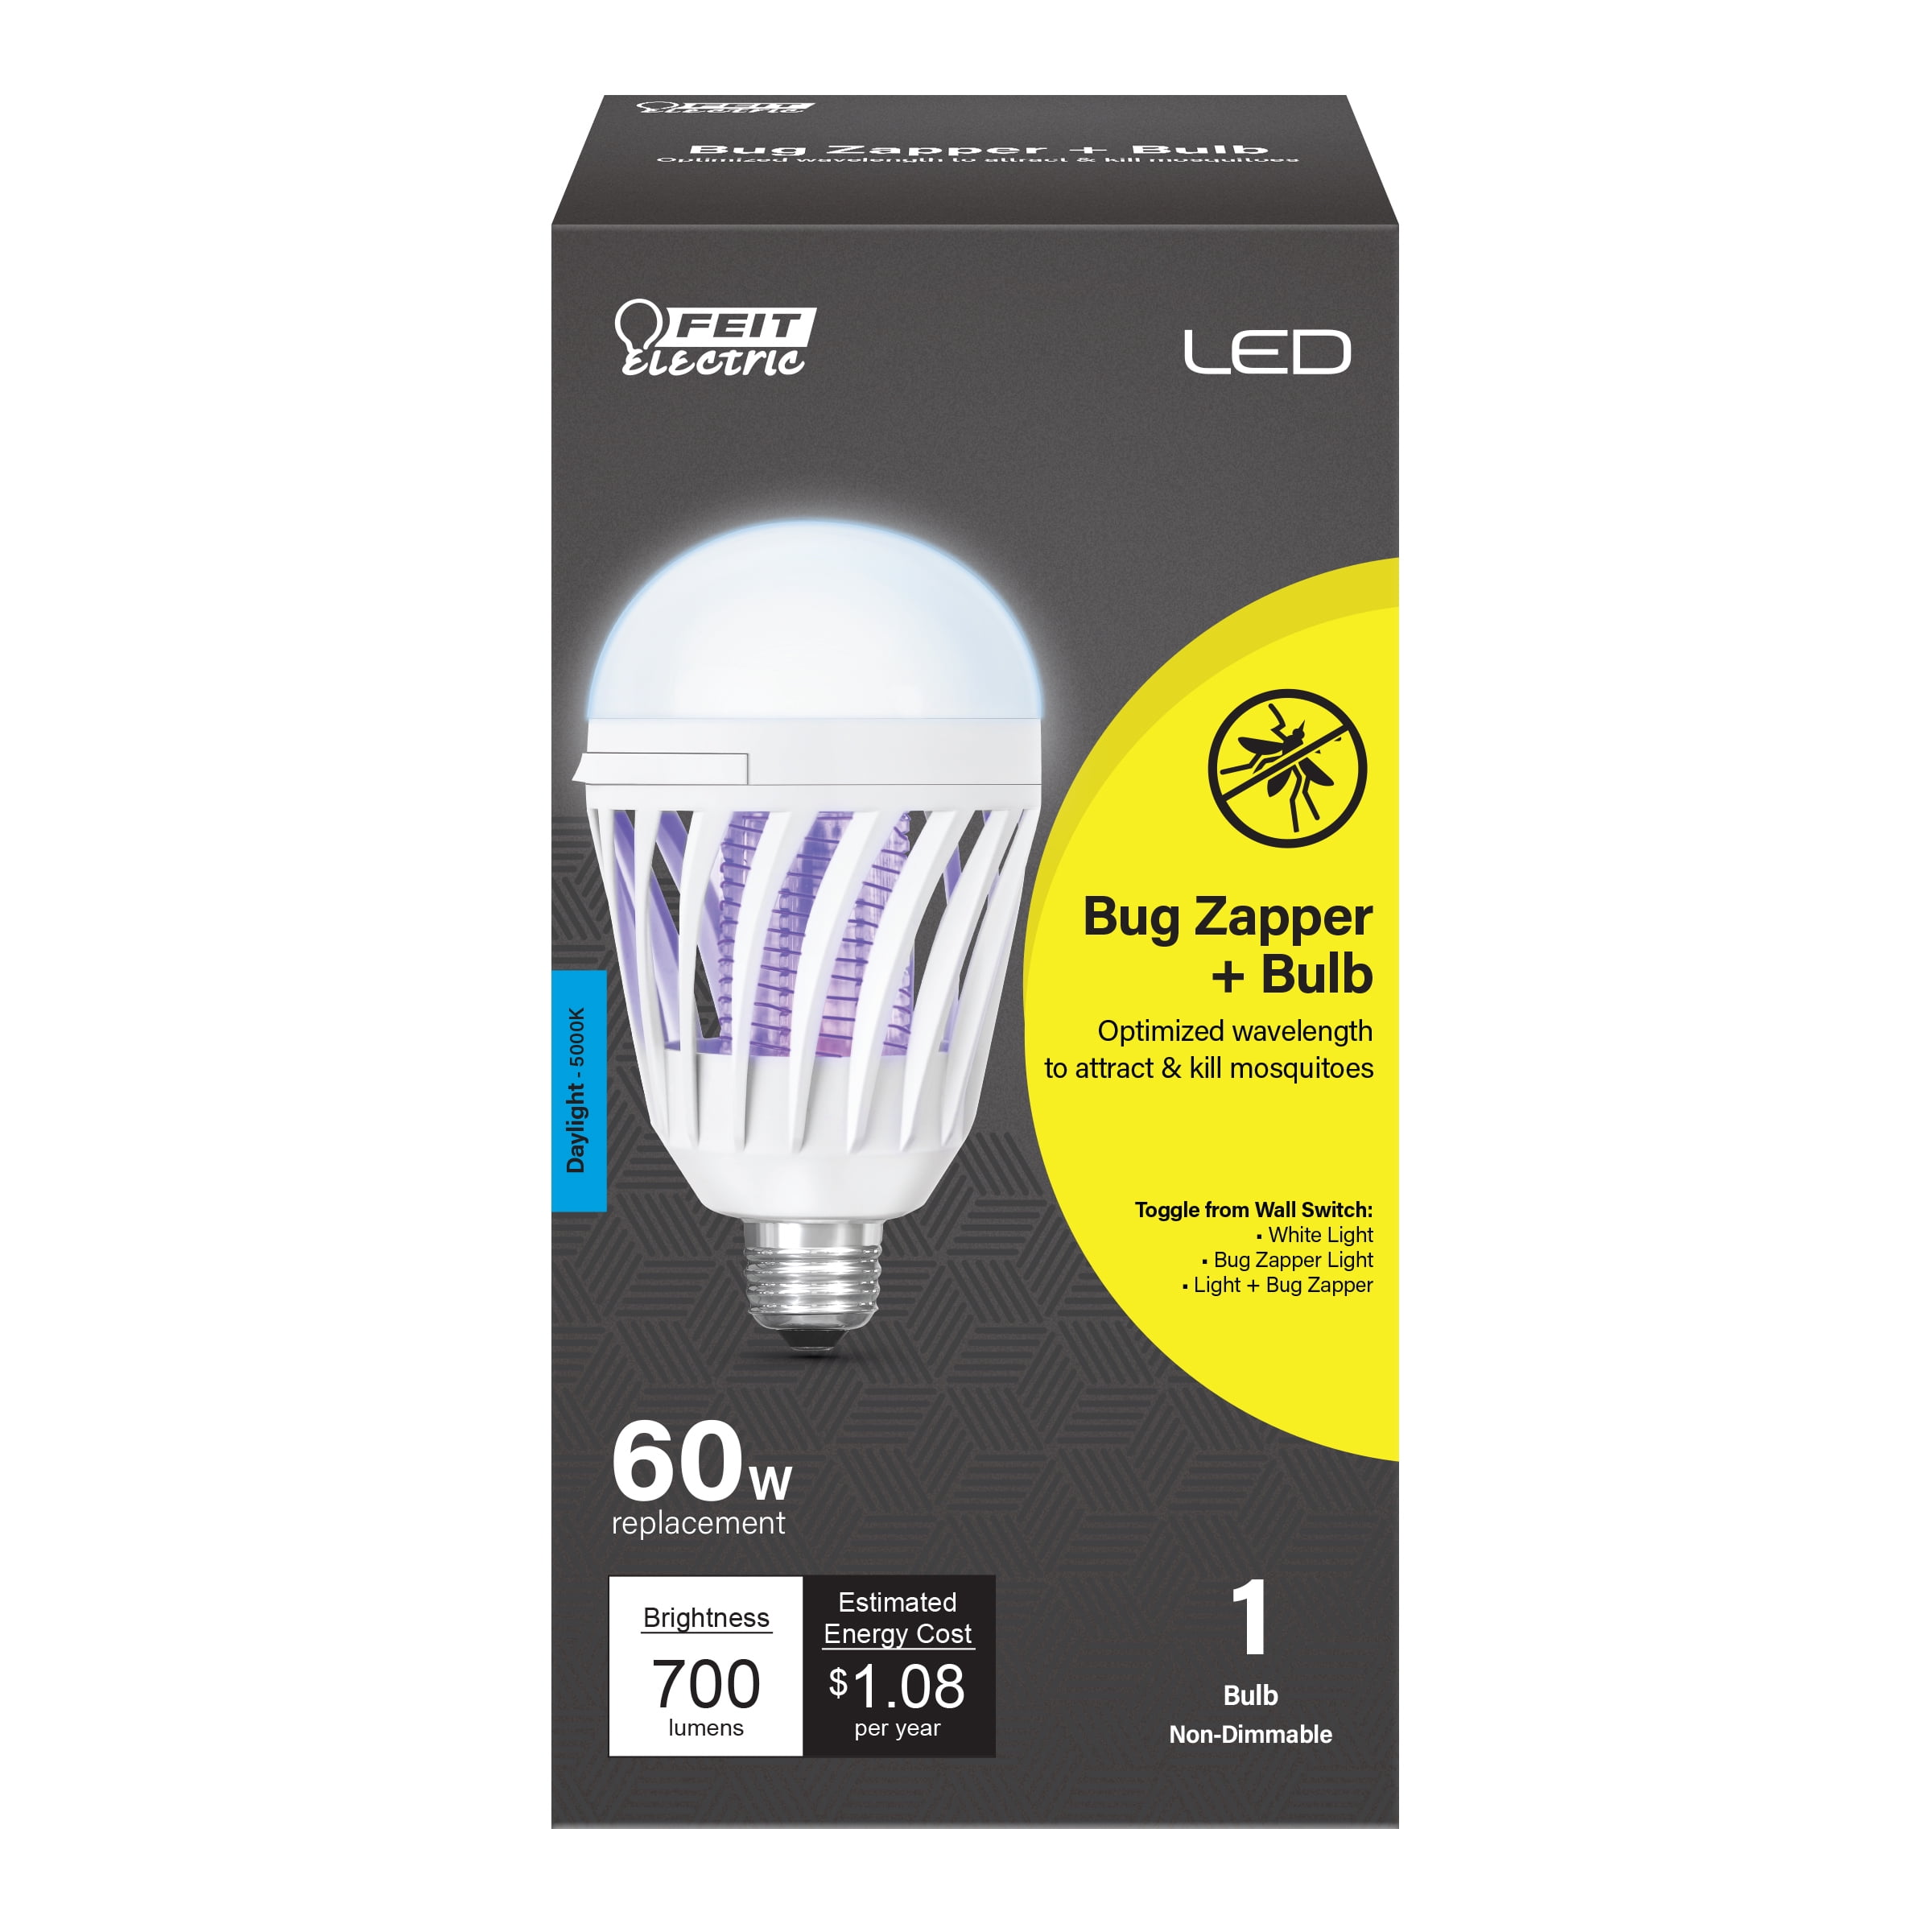 Feit Electric LED 9W (60 Watt Equivalent) Daylight Bug Zapper General Purpose Light Bulb, Cylinder Shape, Med. E26 Base